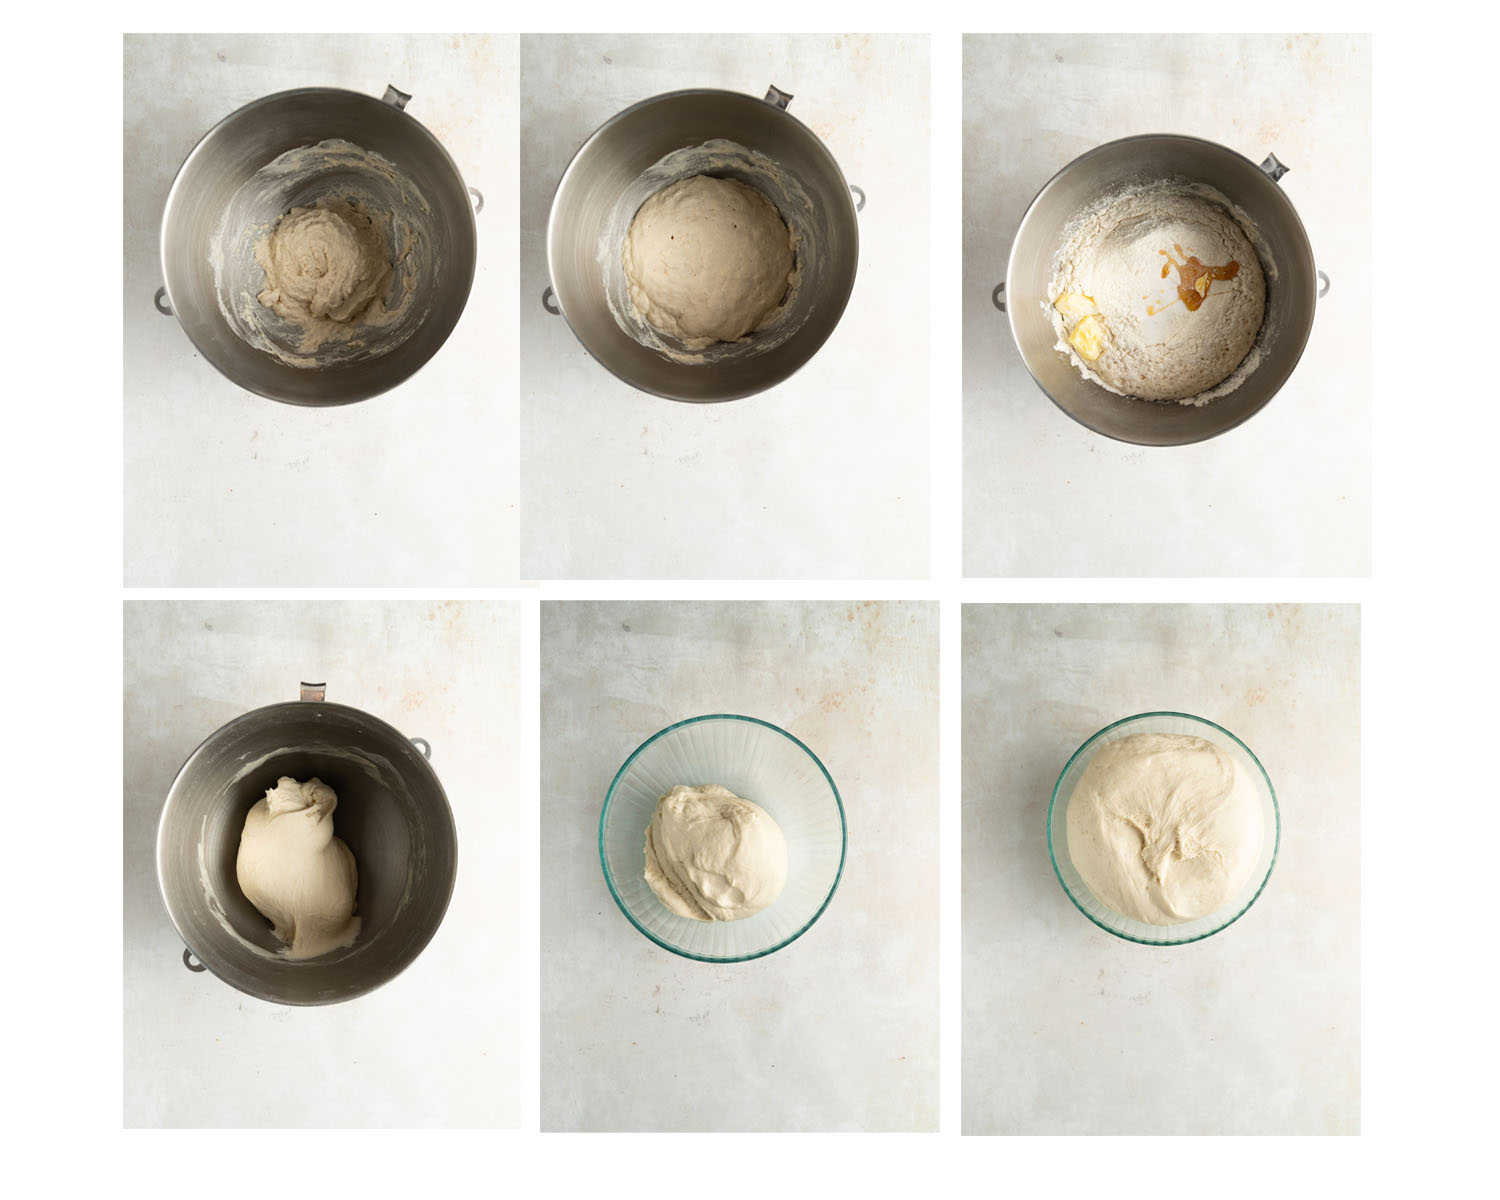 Process images for making semmel dough.